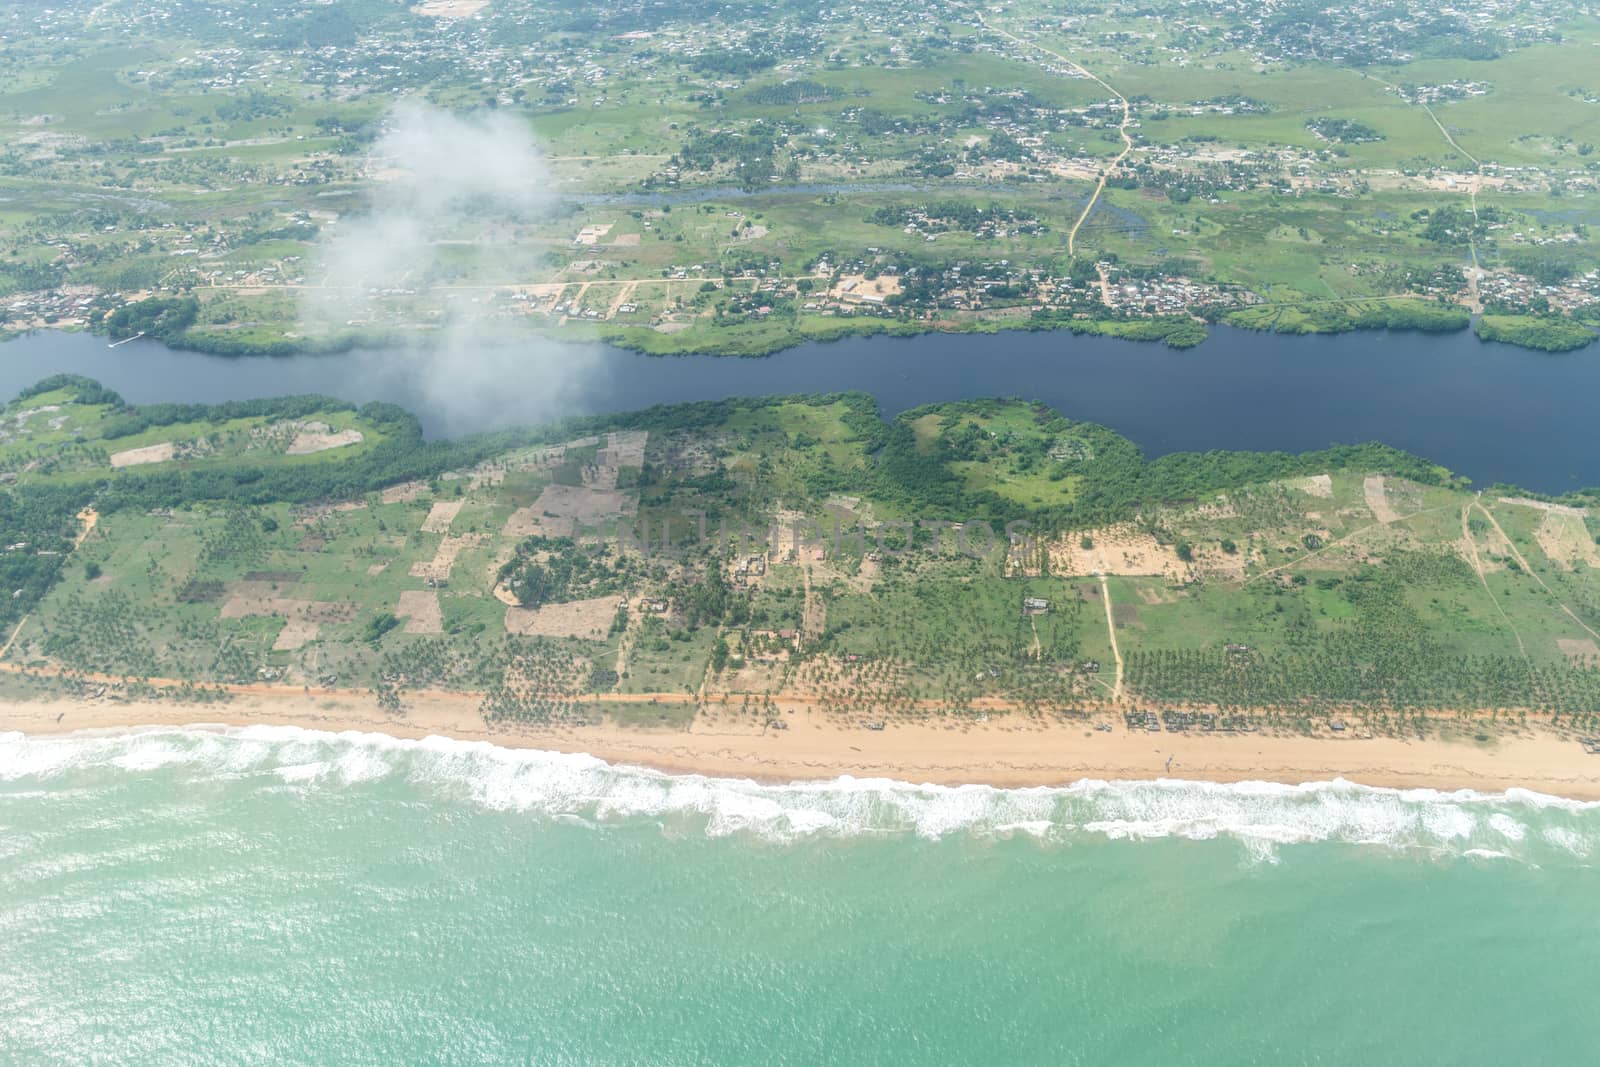 Aerial view of the Atlantic Ocean coastline along the shores of Cotonou, Benin